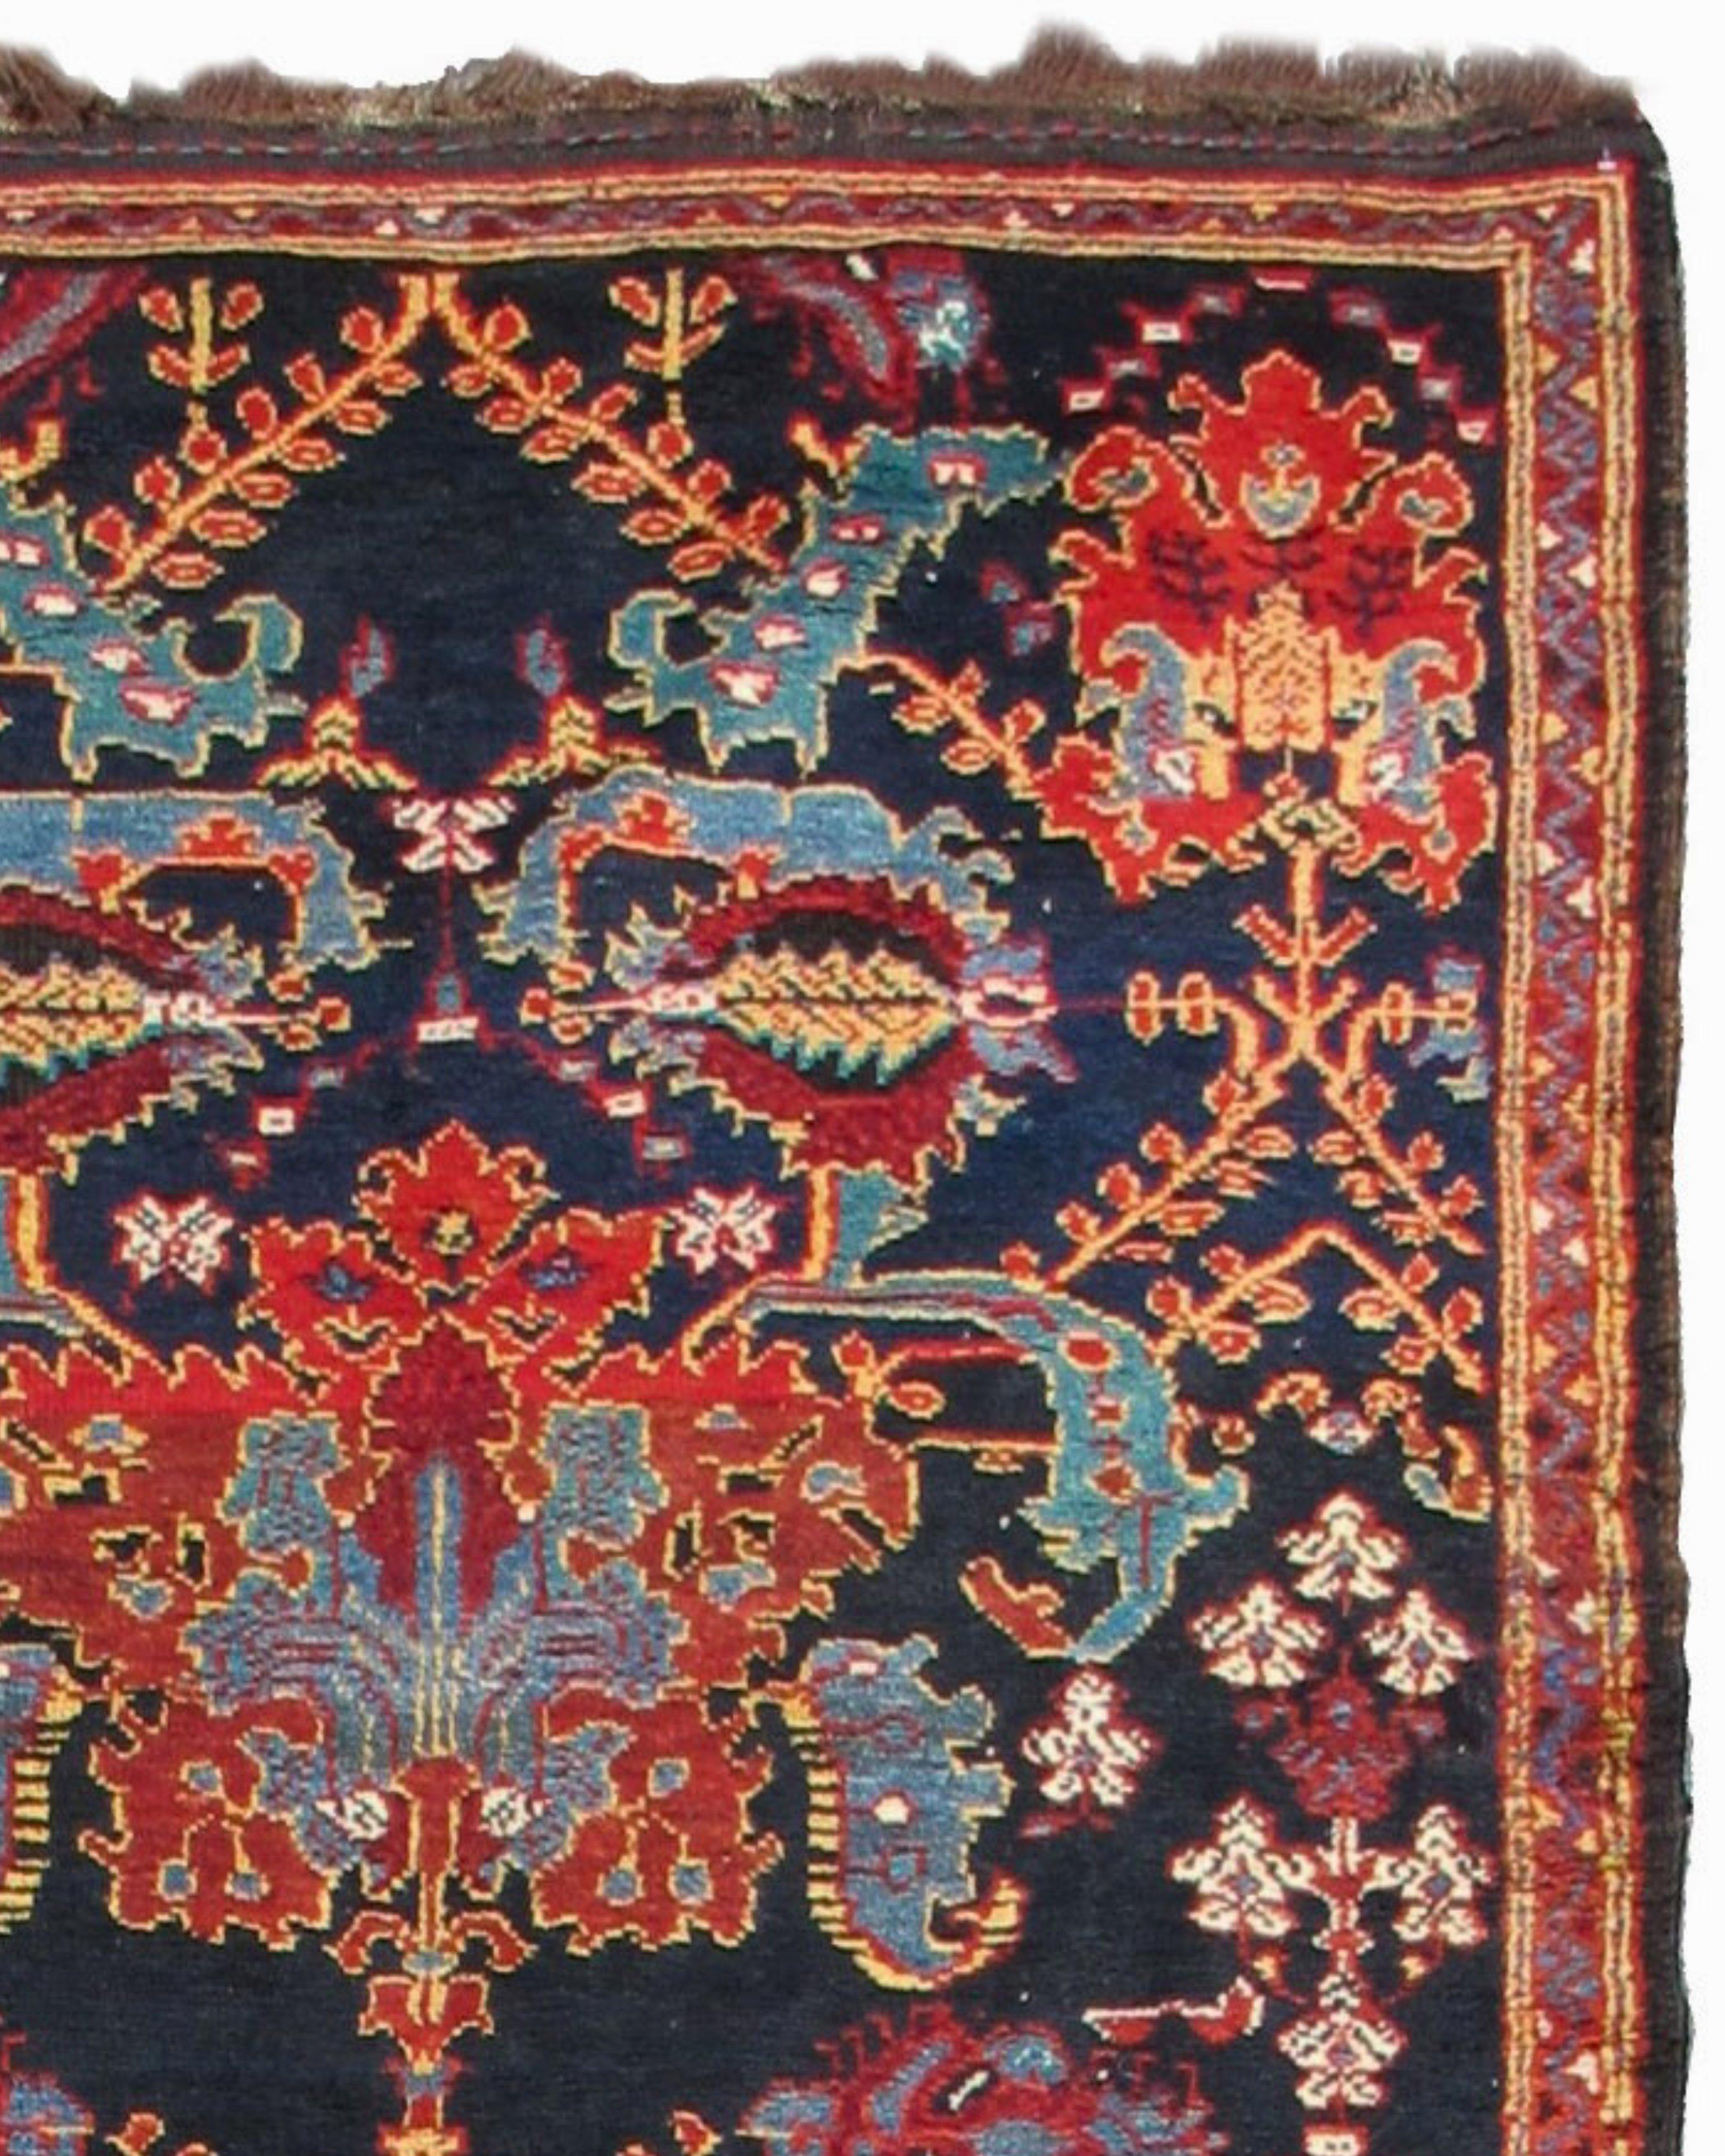 Antique Persian Bakhtiari Long Rug, c. 1920

Additional Information:
Dimensions: 4'2